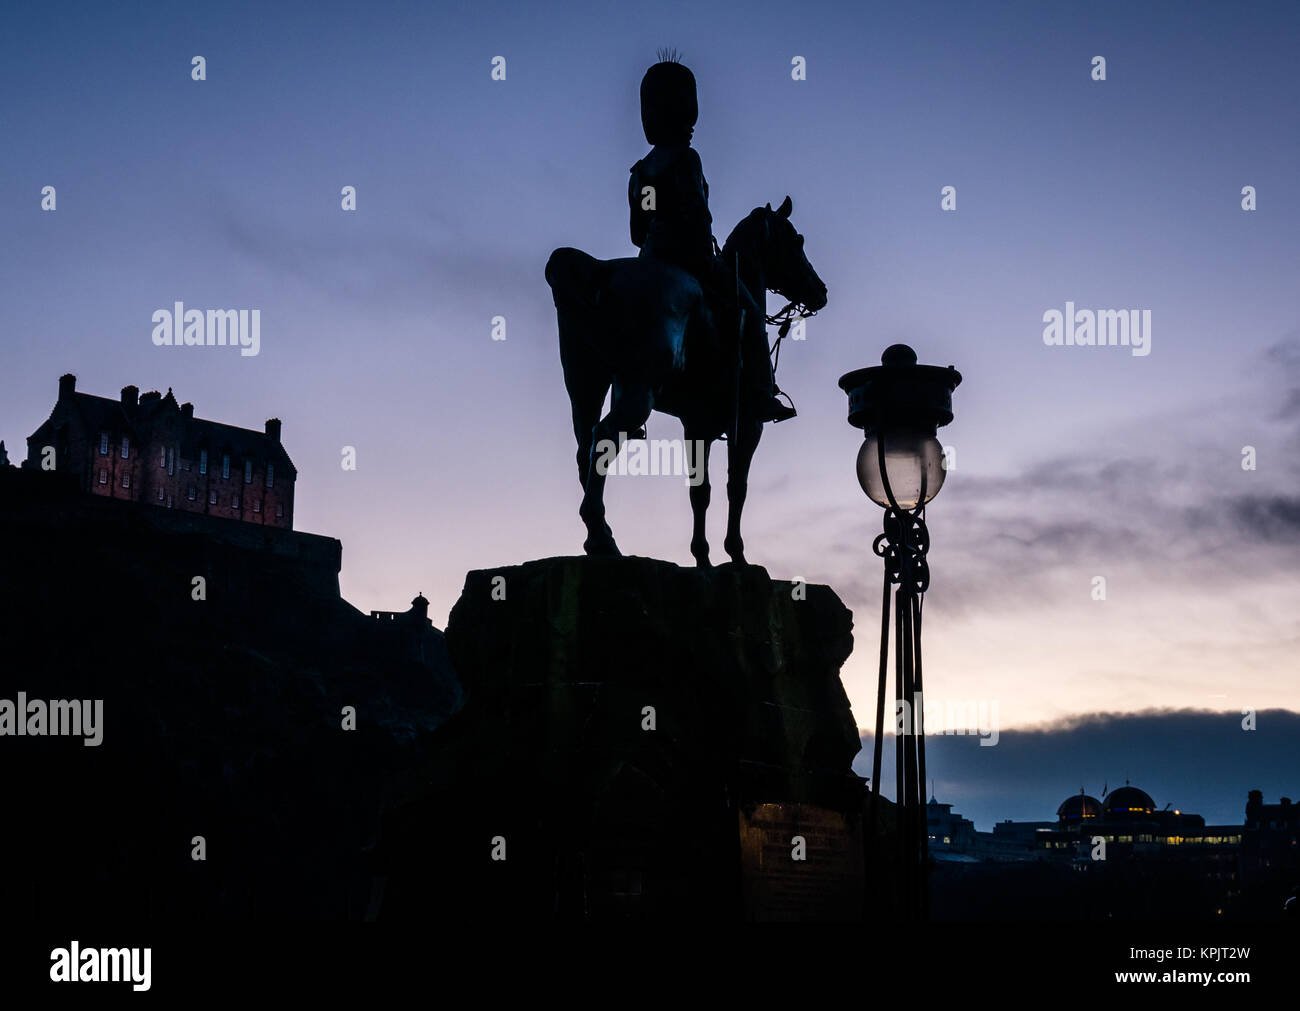 Silhouette Royal Scots Greys Monument soldier on horseback by William Birnie Rhind, Edinburgh Castle, Princes Street, Edinburgh, Scotland, UK at dusk Stock Photo